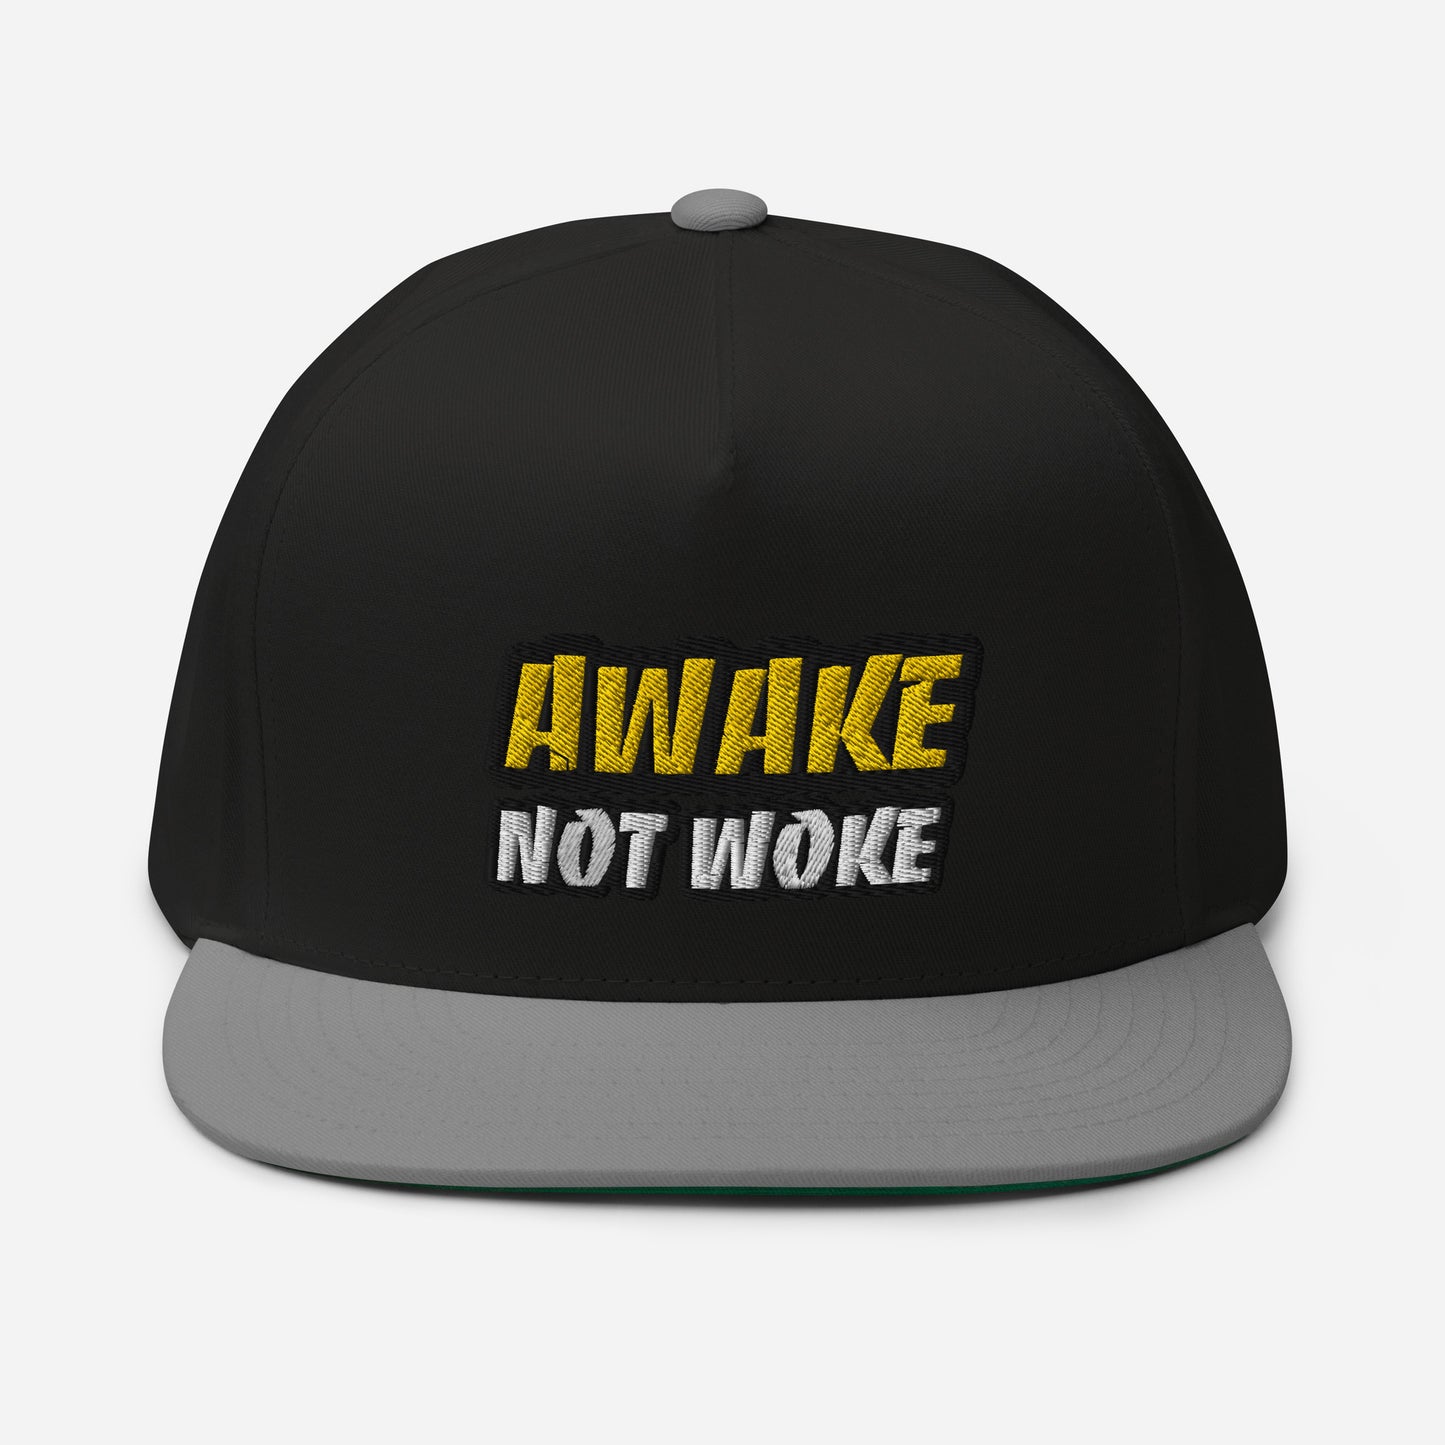 Awake Not Woke Unisex Baseball Cap: The Perfect Anti-Socialist Accessory for Those Who Value Individualism and Critical Thinking